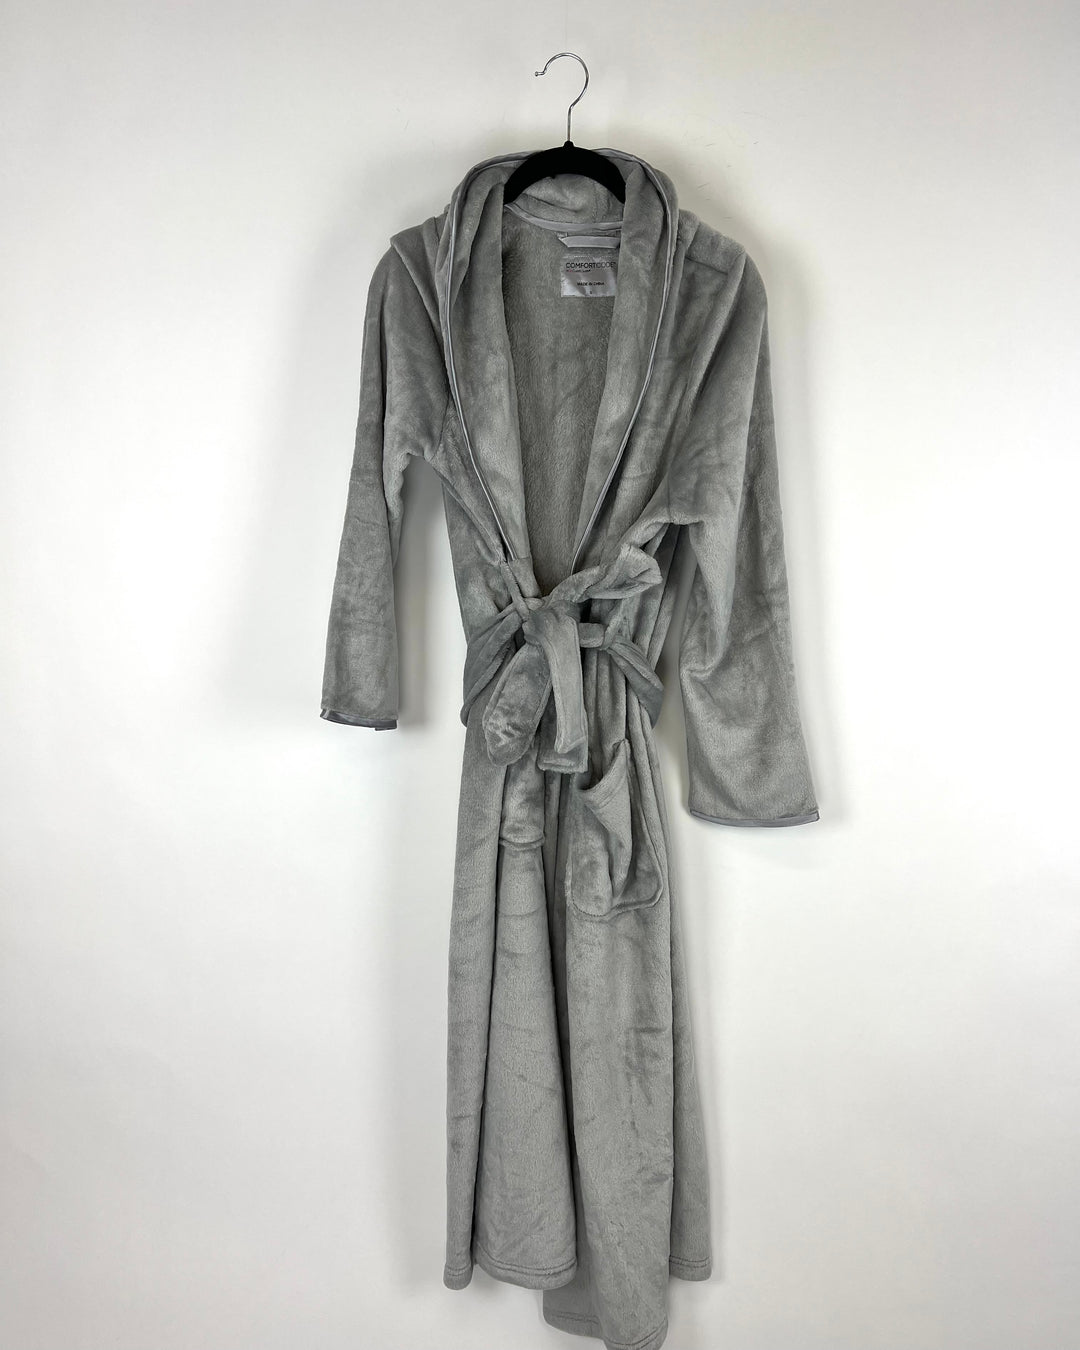 Soft Gray Robe - Size 6/8